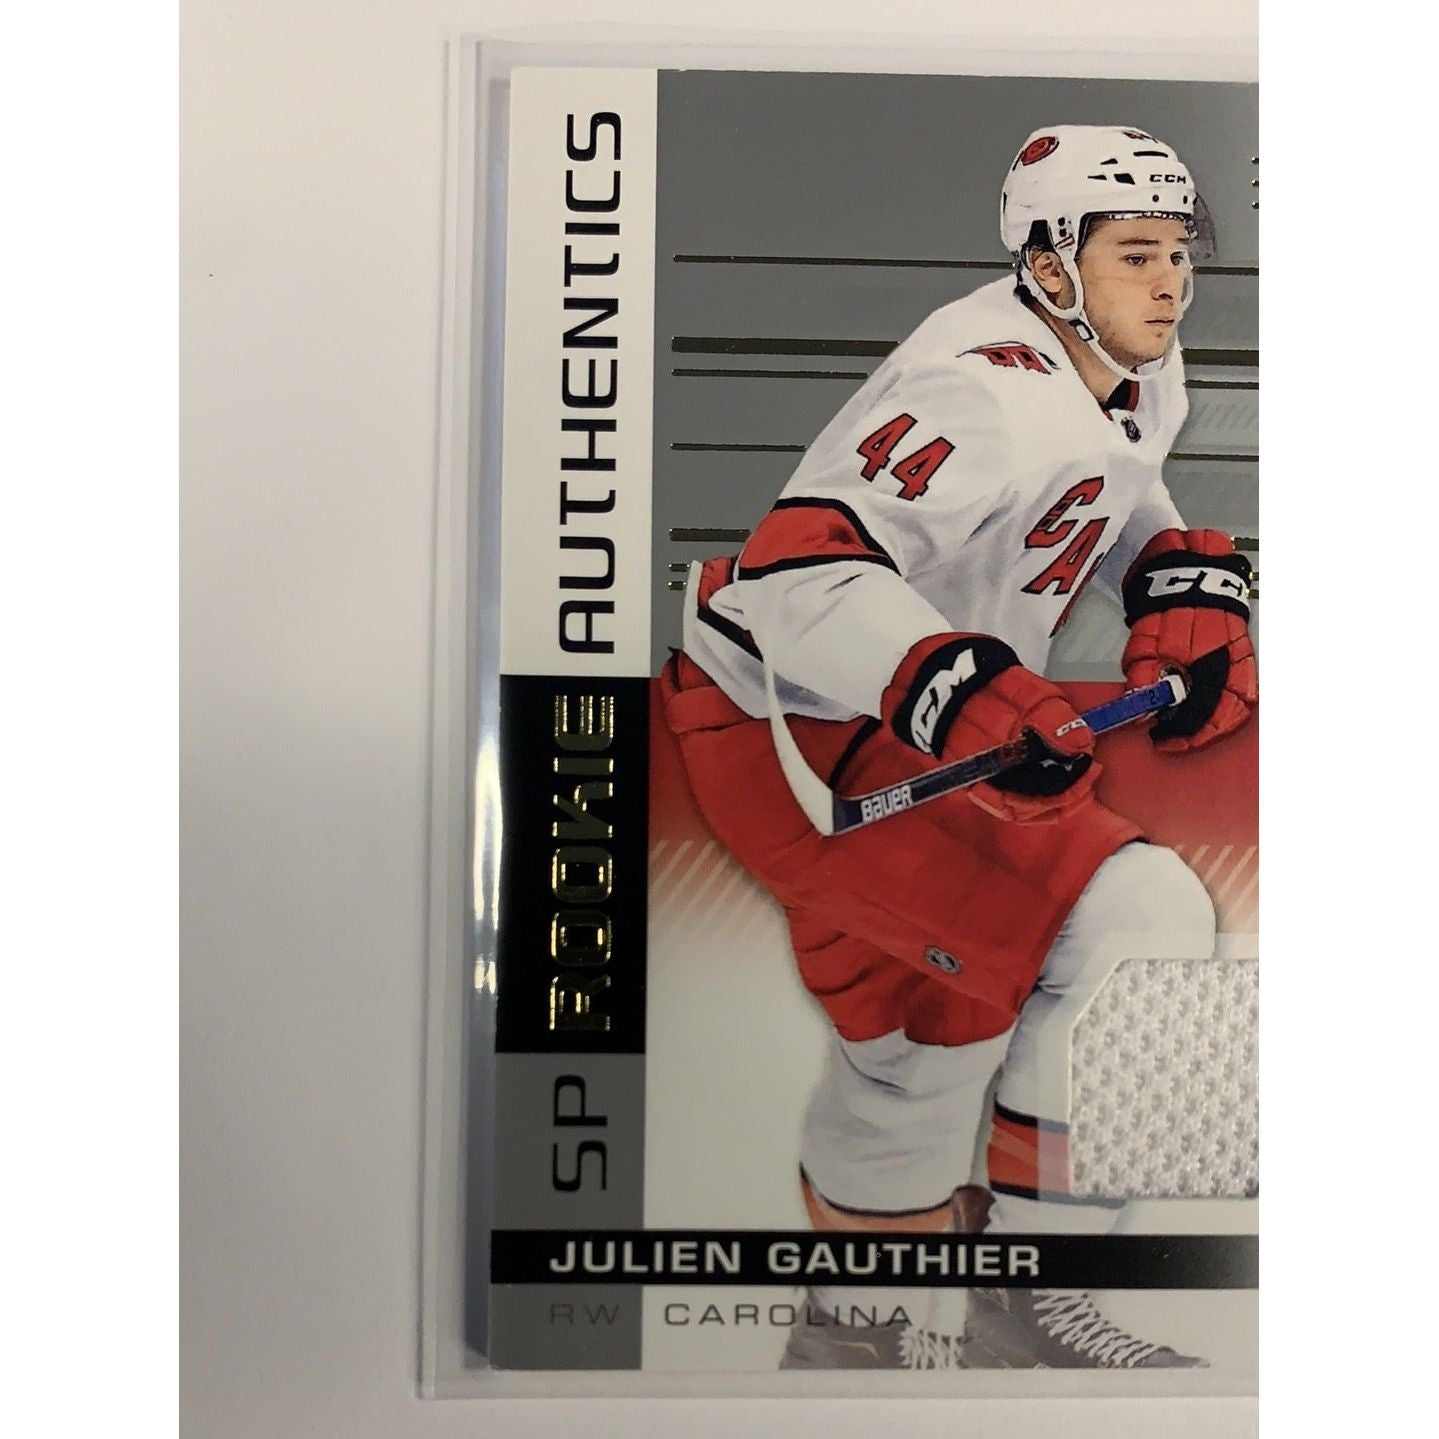  2019-20 SP Julien Gauthier Rookie Authentics Jersey Patch  Local Legends Cards & Collectibles